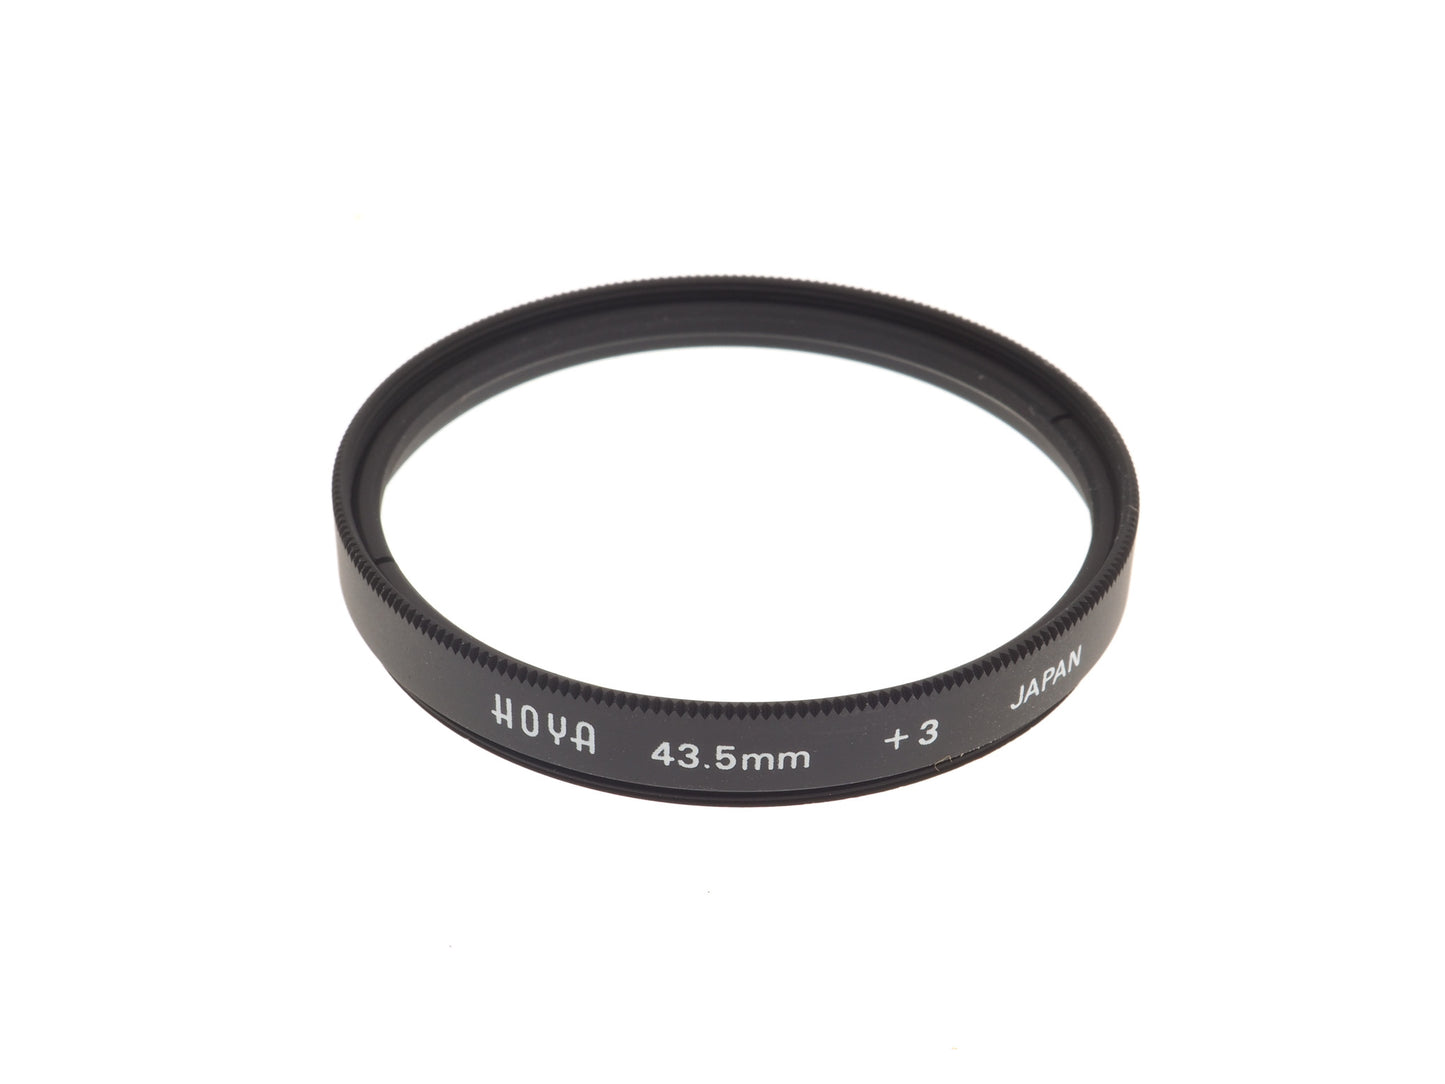 Hoya 43.5mm Close Up Filter +3 - Accessory